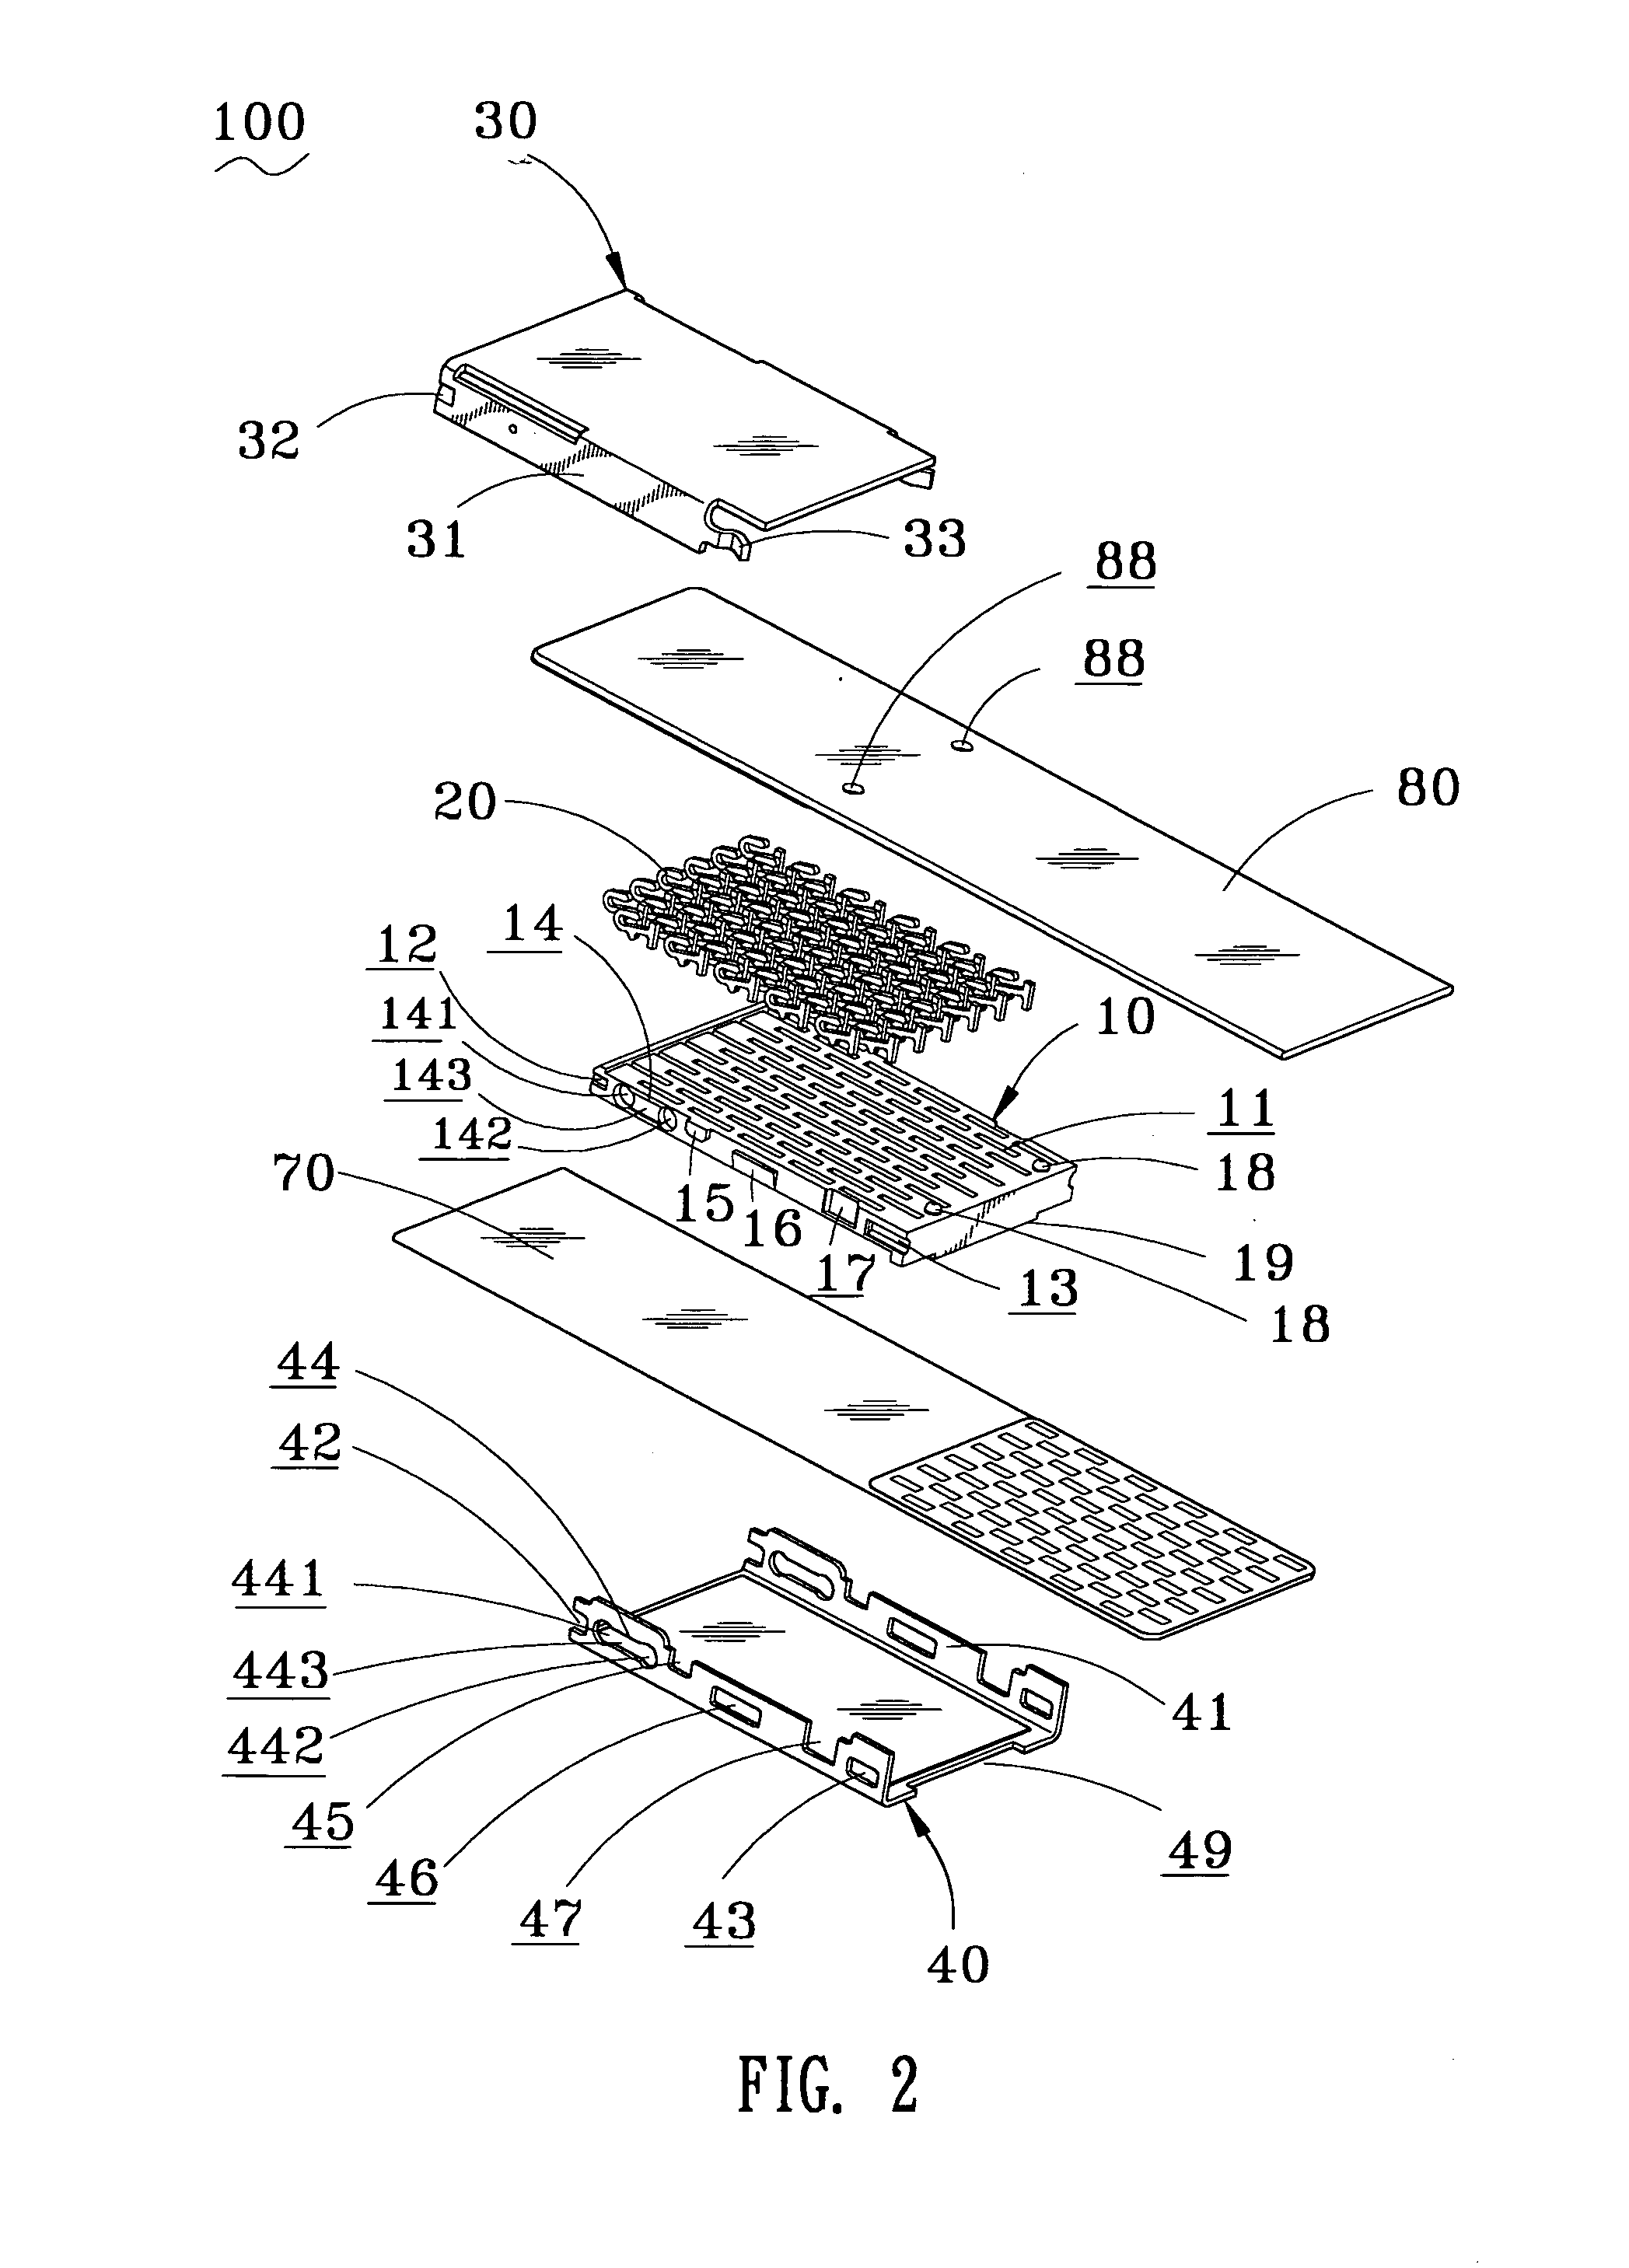 Flexible printed circuit connector